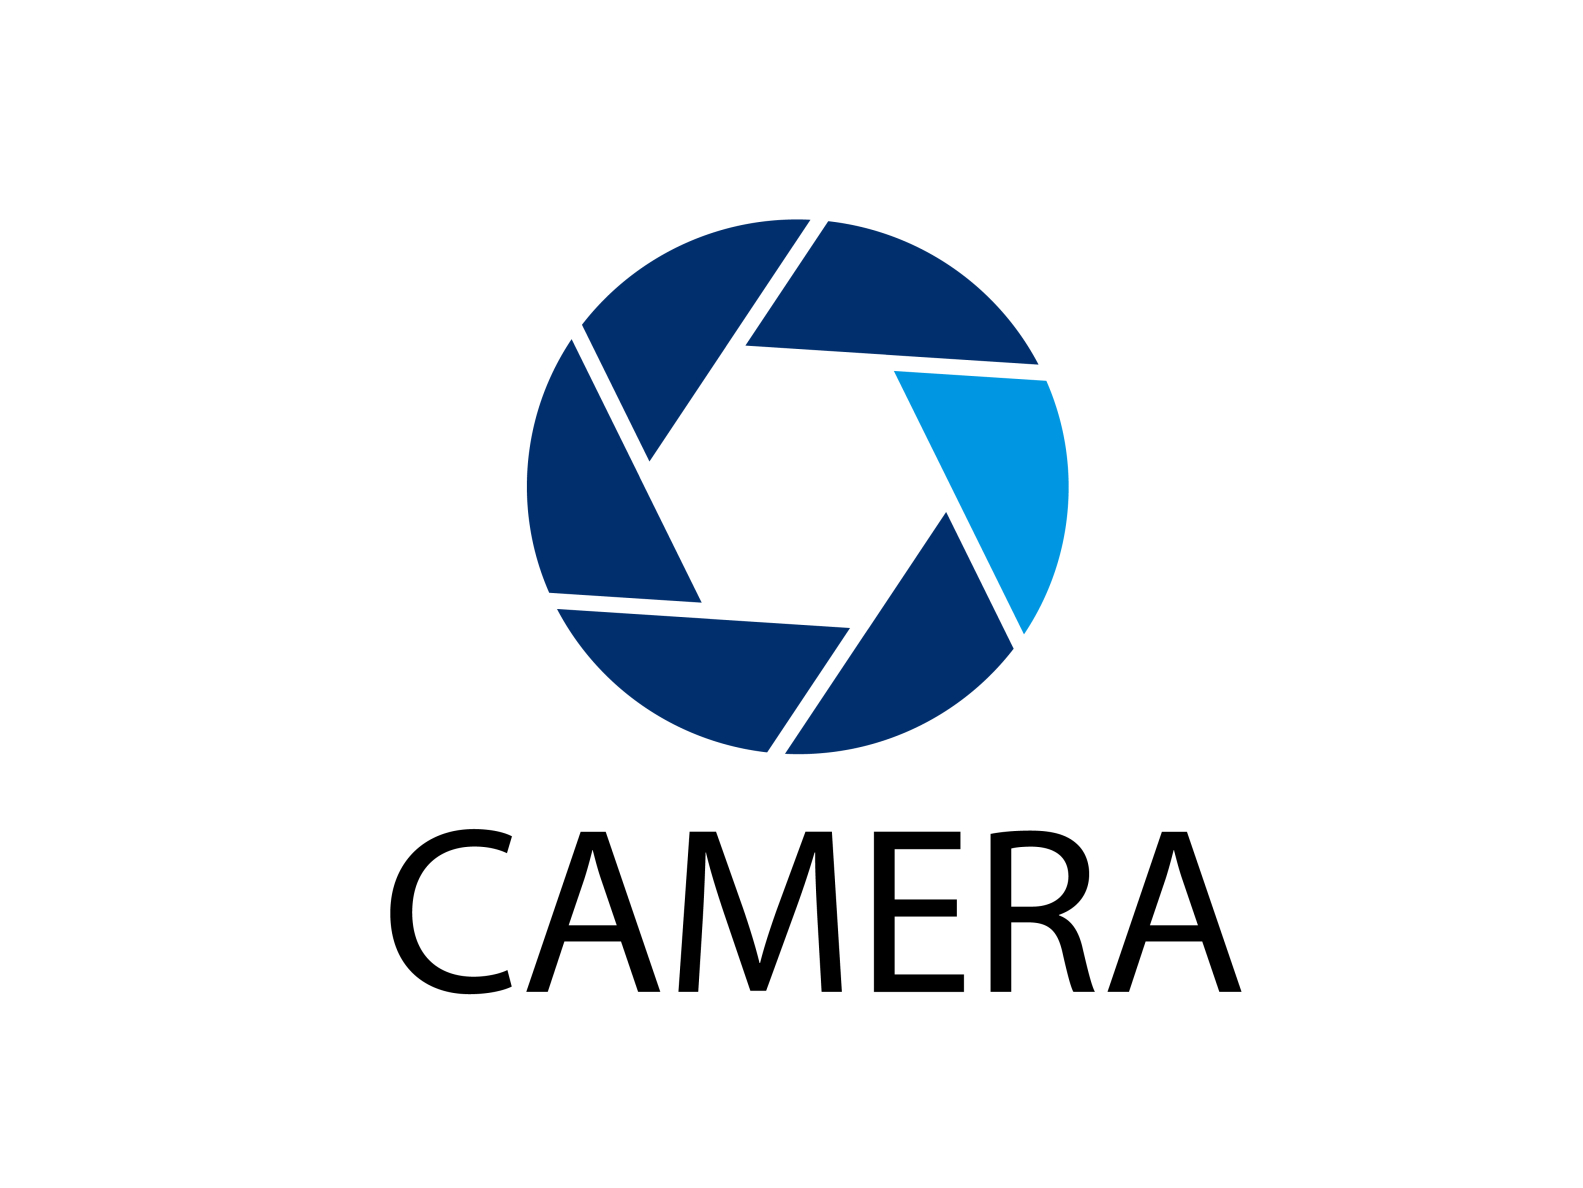 camera logo by Nur Fauzi on Dribbble